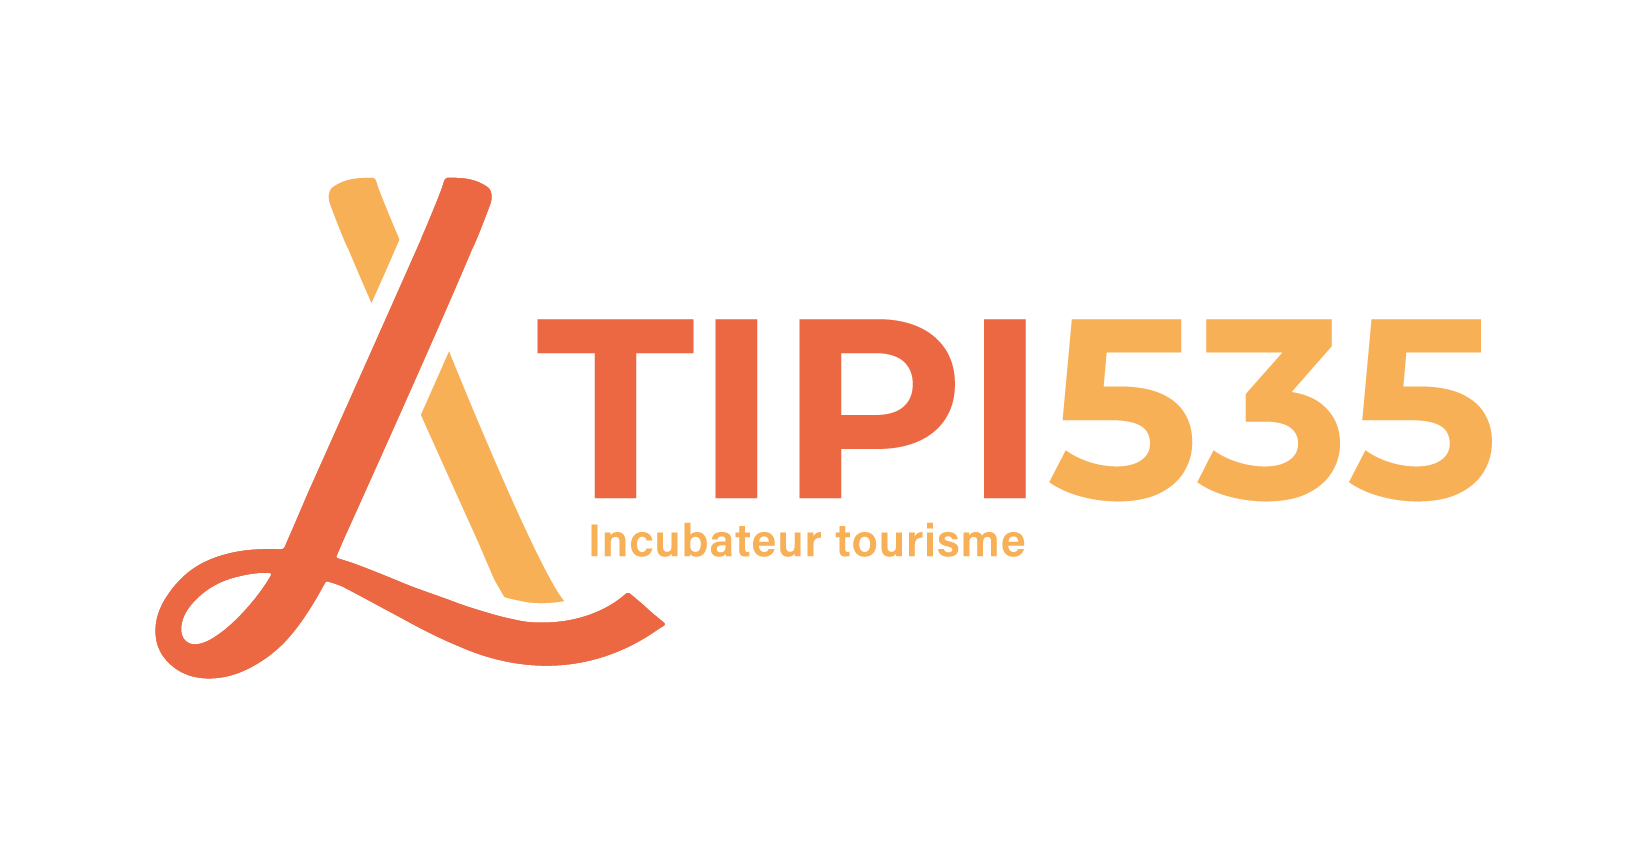 TIPI 535